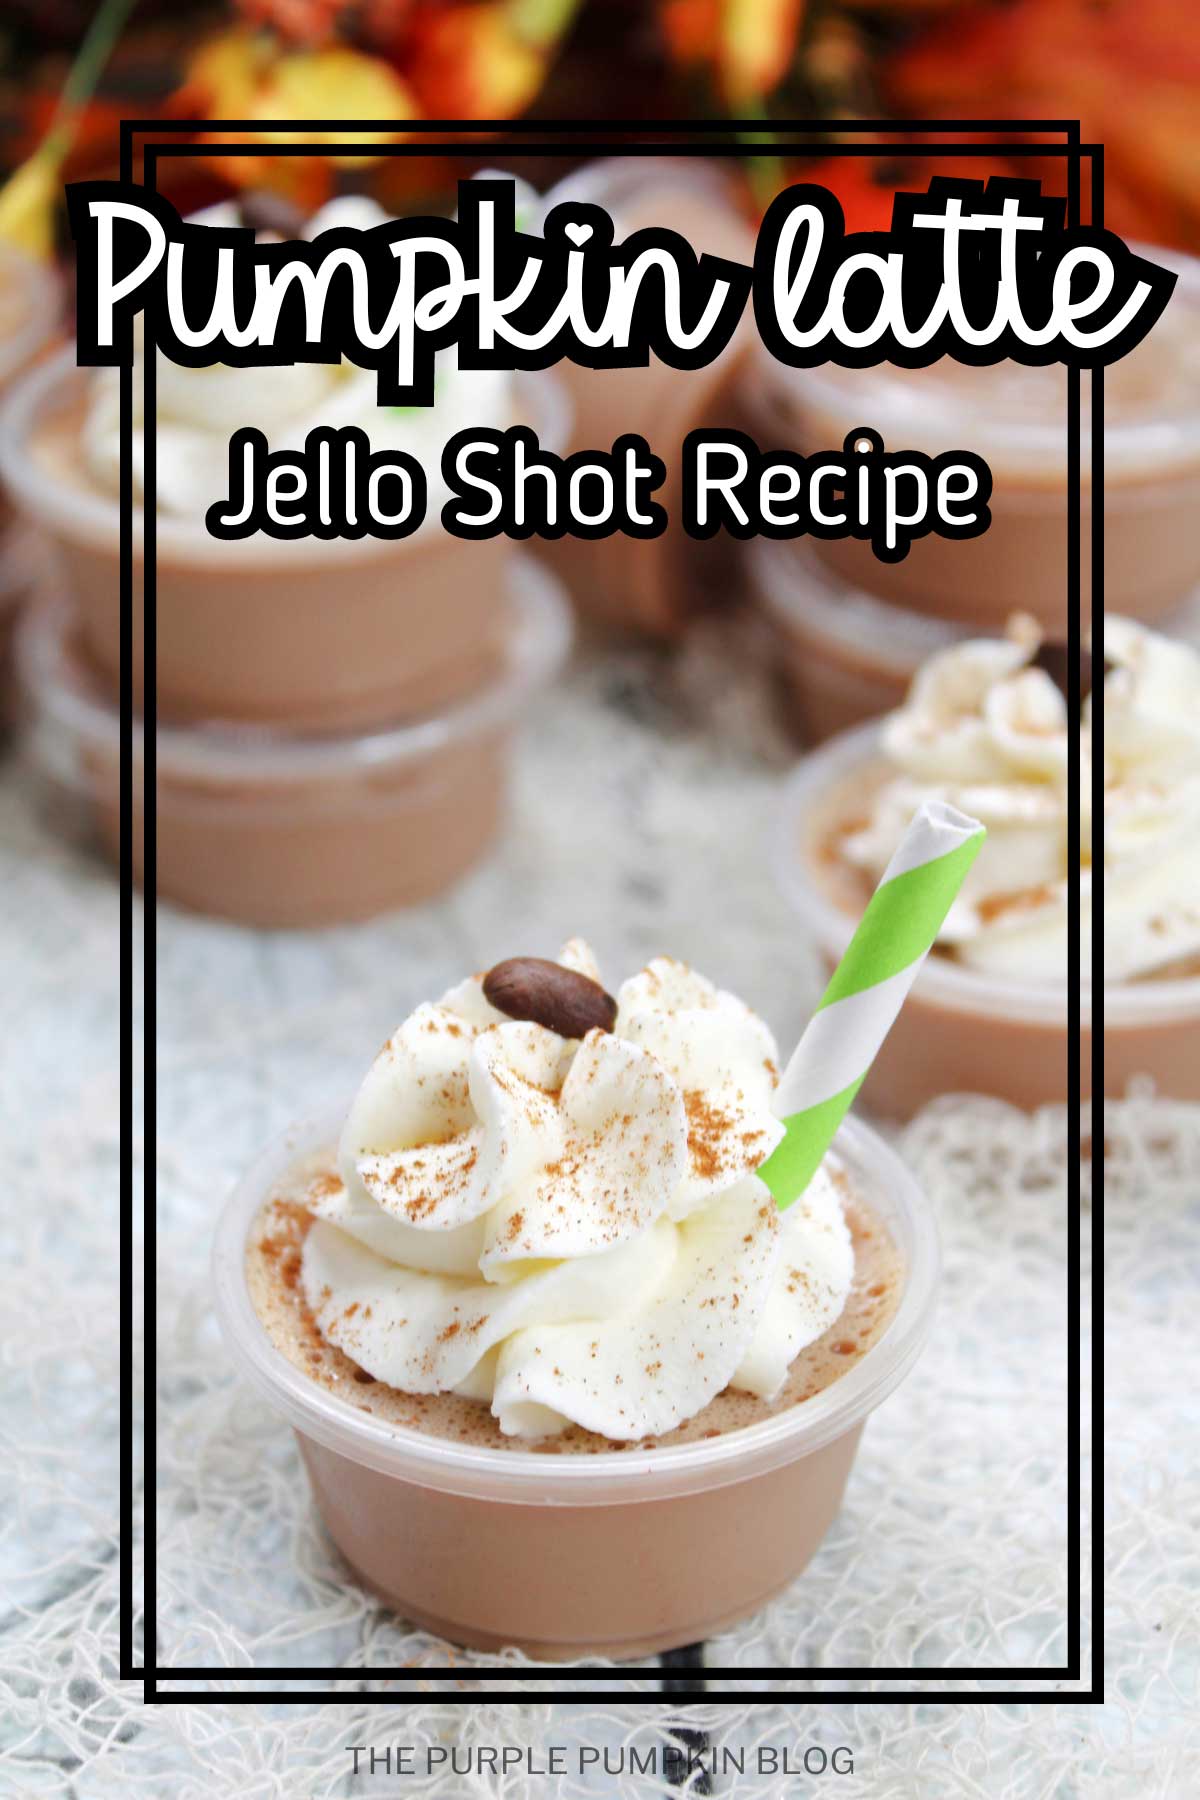 Pumpkin-Latte-Jello-Shot-Recipe